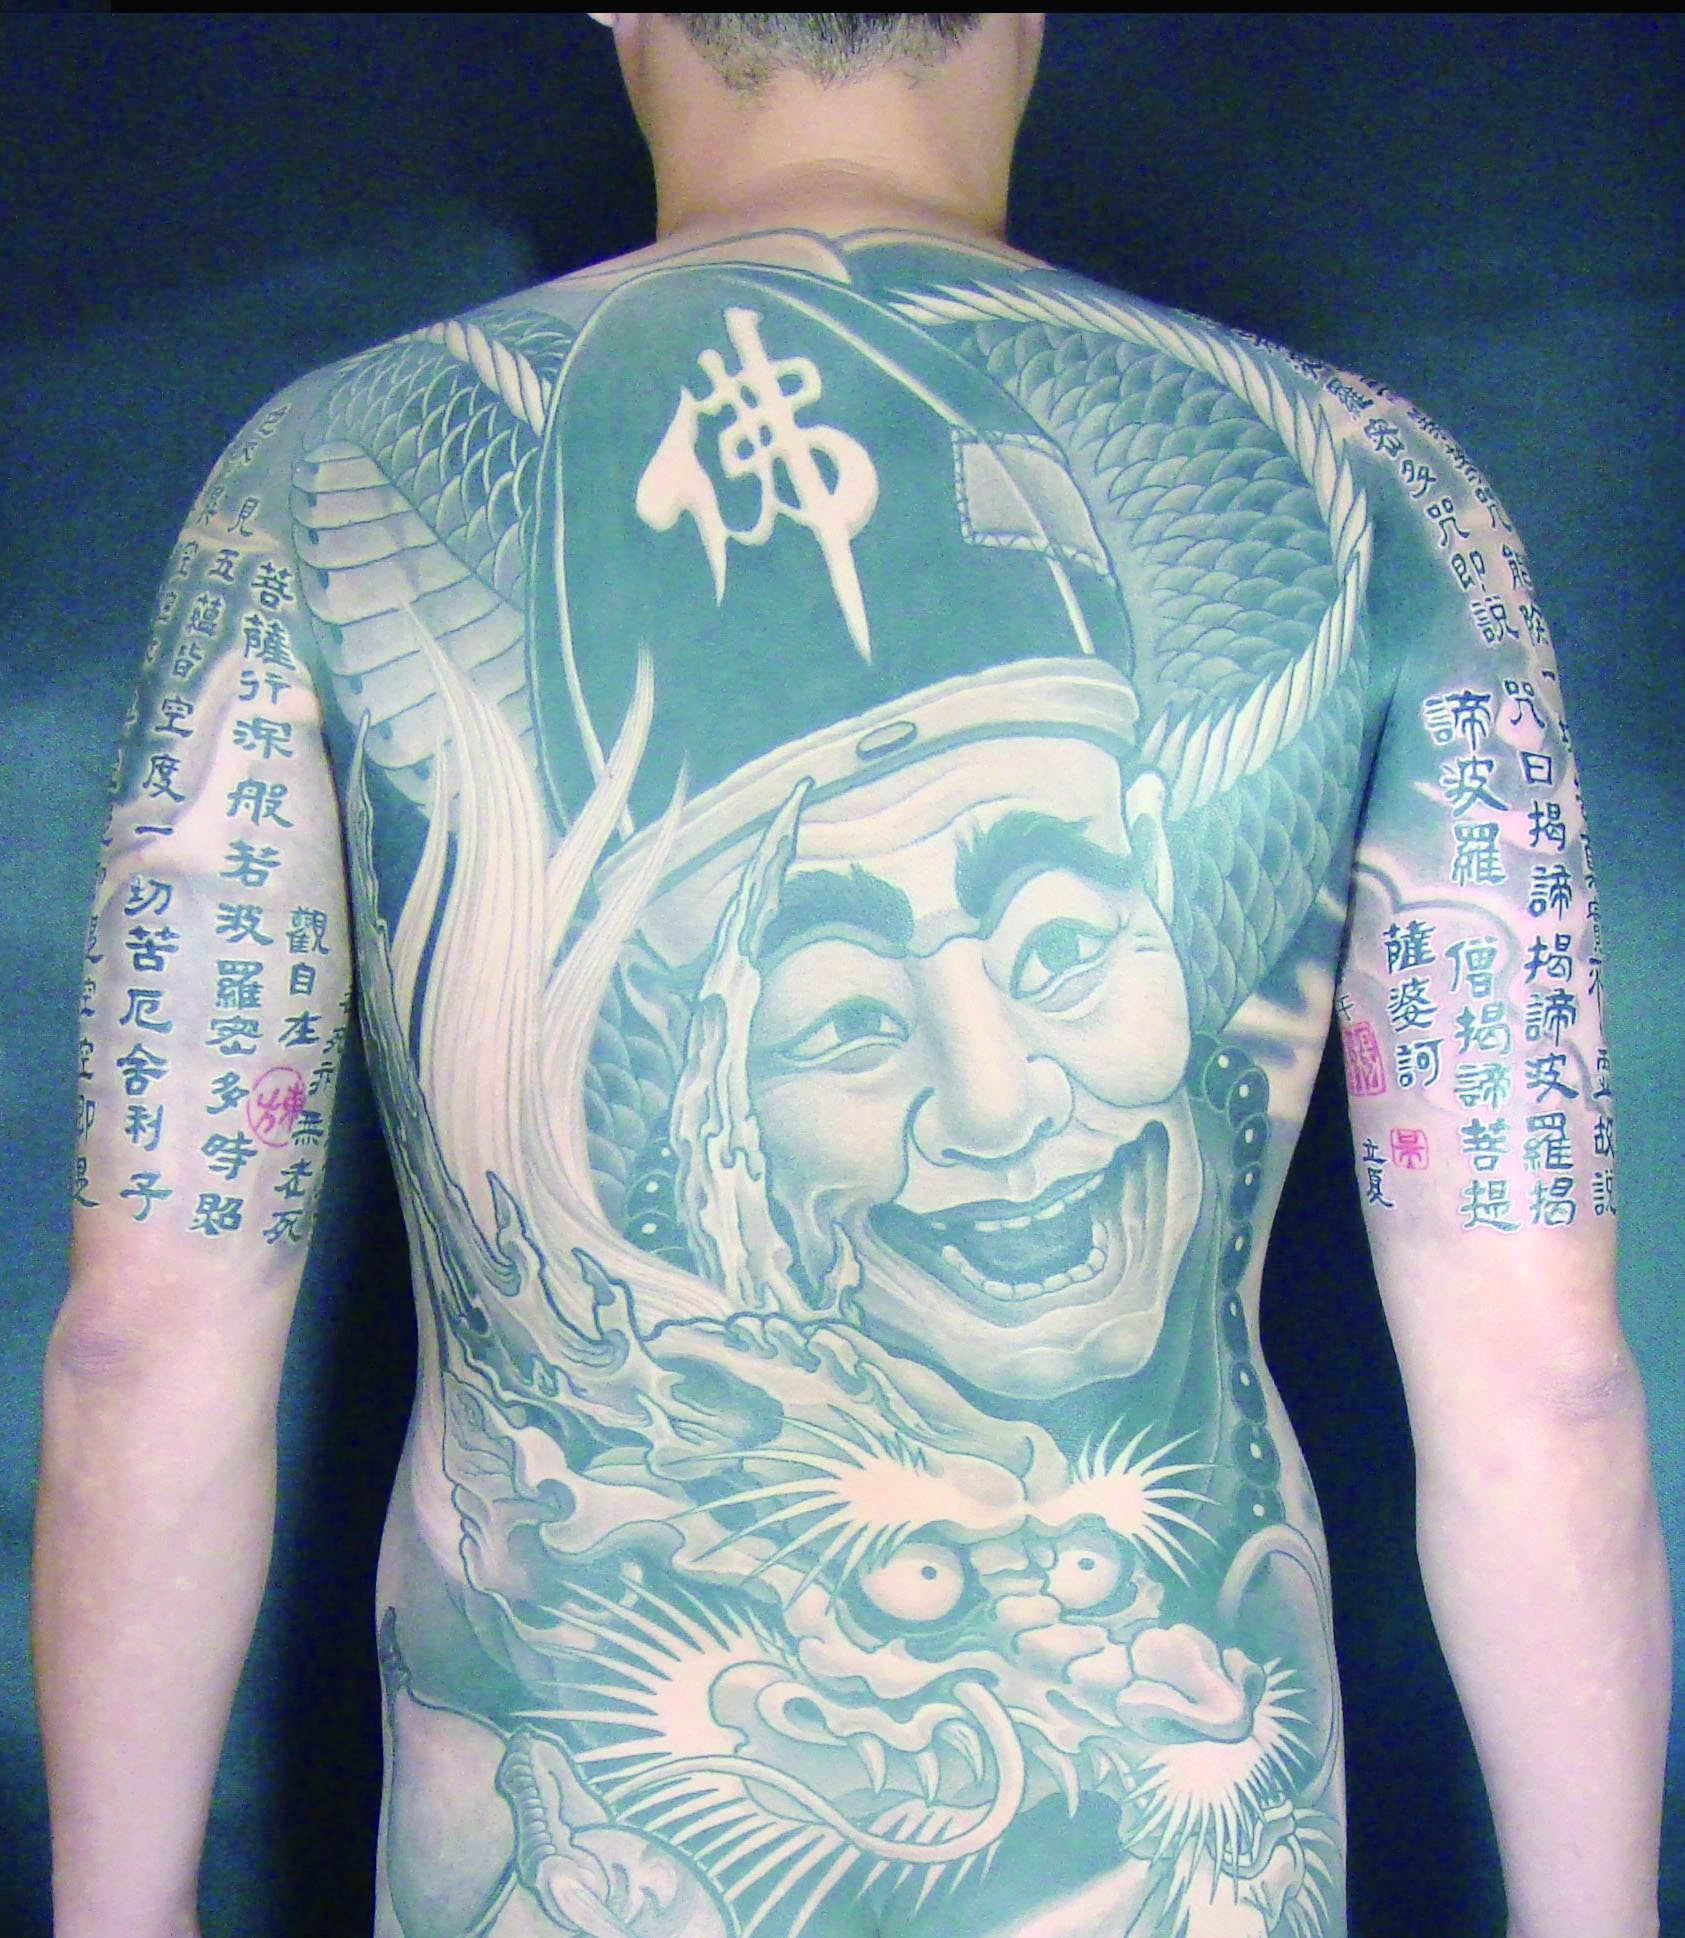 楊金祥2009年獲得義大利米蘭紋身展「黑白組」冠軍作品(照片提供／東方紋身)  Mr. Yang's award winning tattoo in the black and white category at the 2009 Milan Tattoo Convention (Photo courtesy East Tottoo)